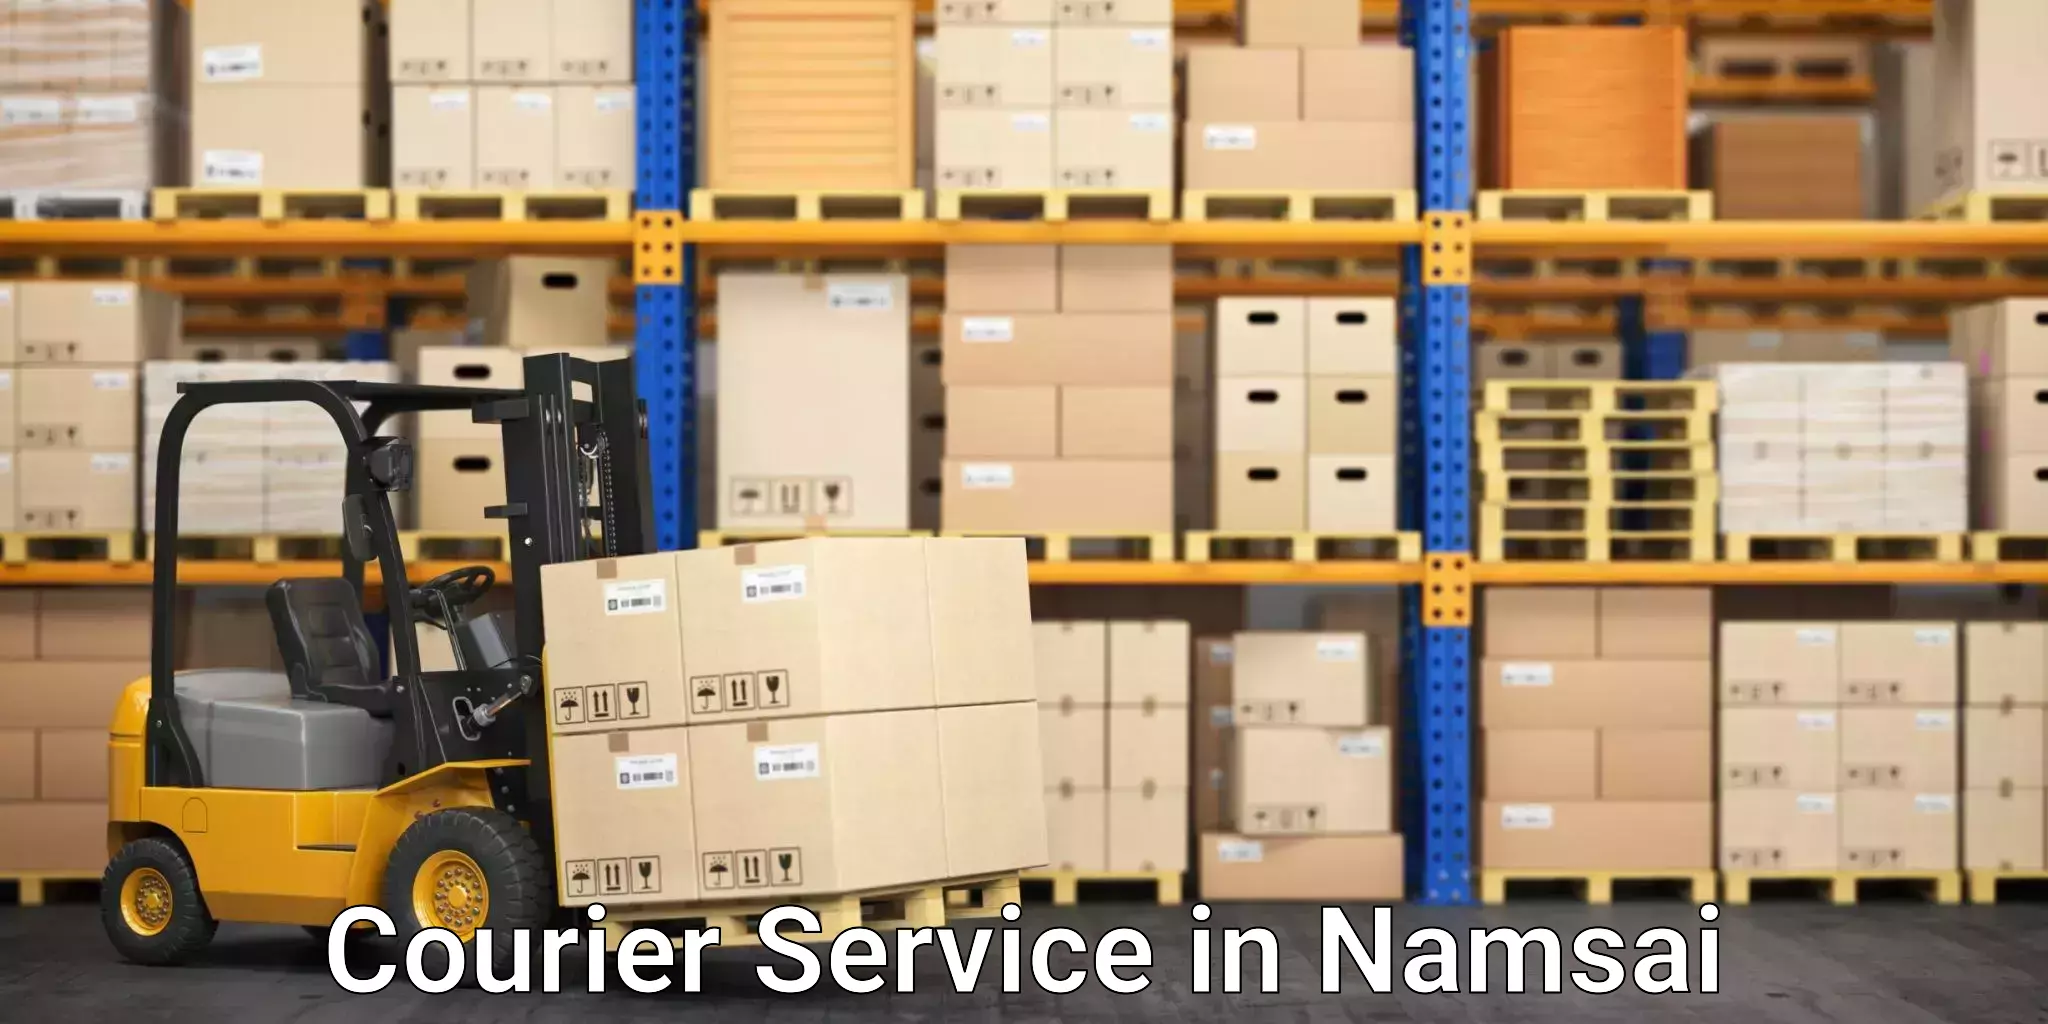 Express logistics providers in Namsai